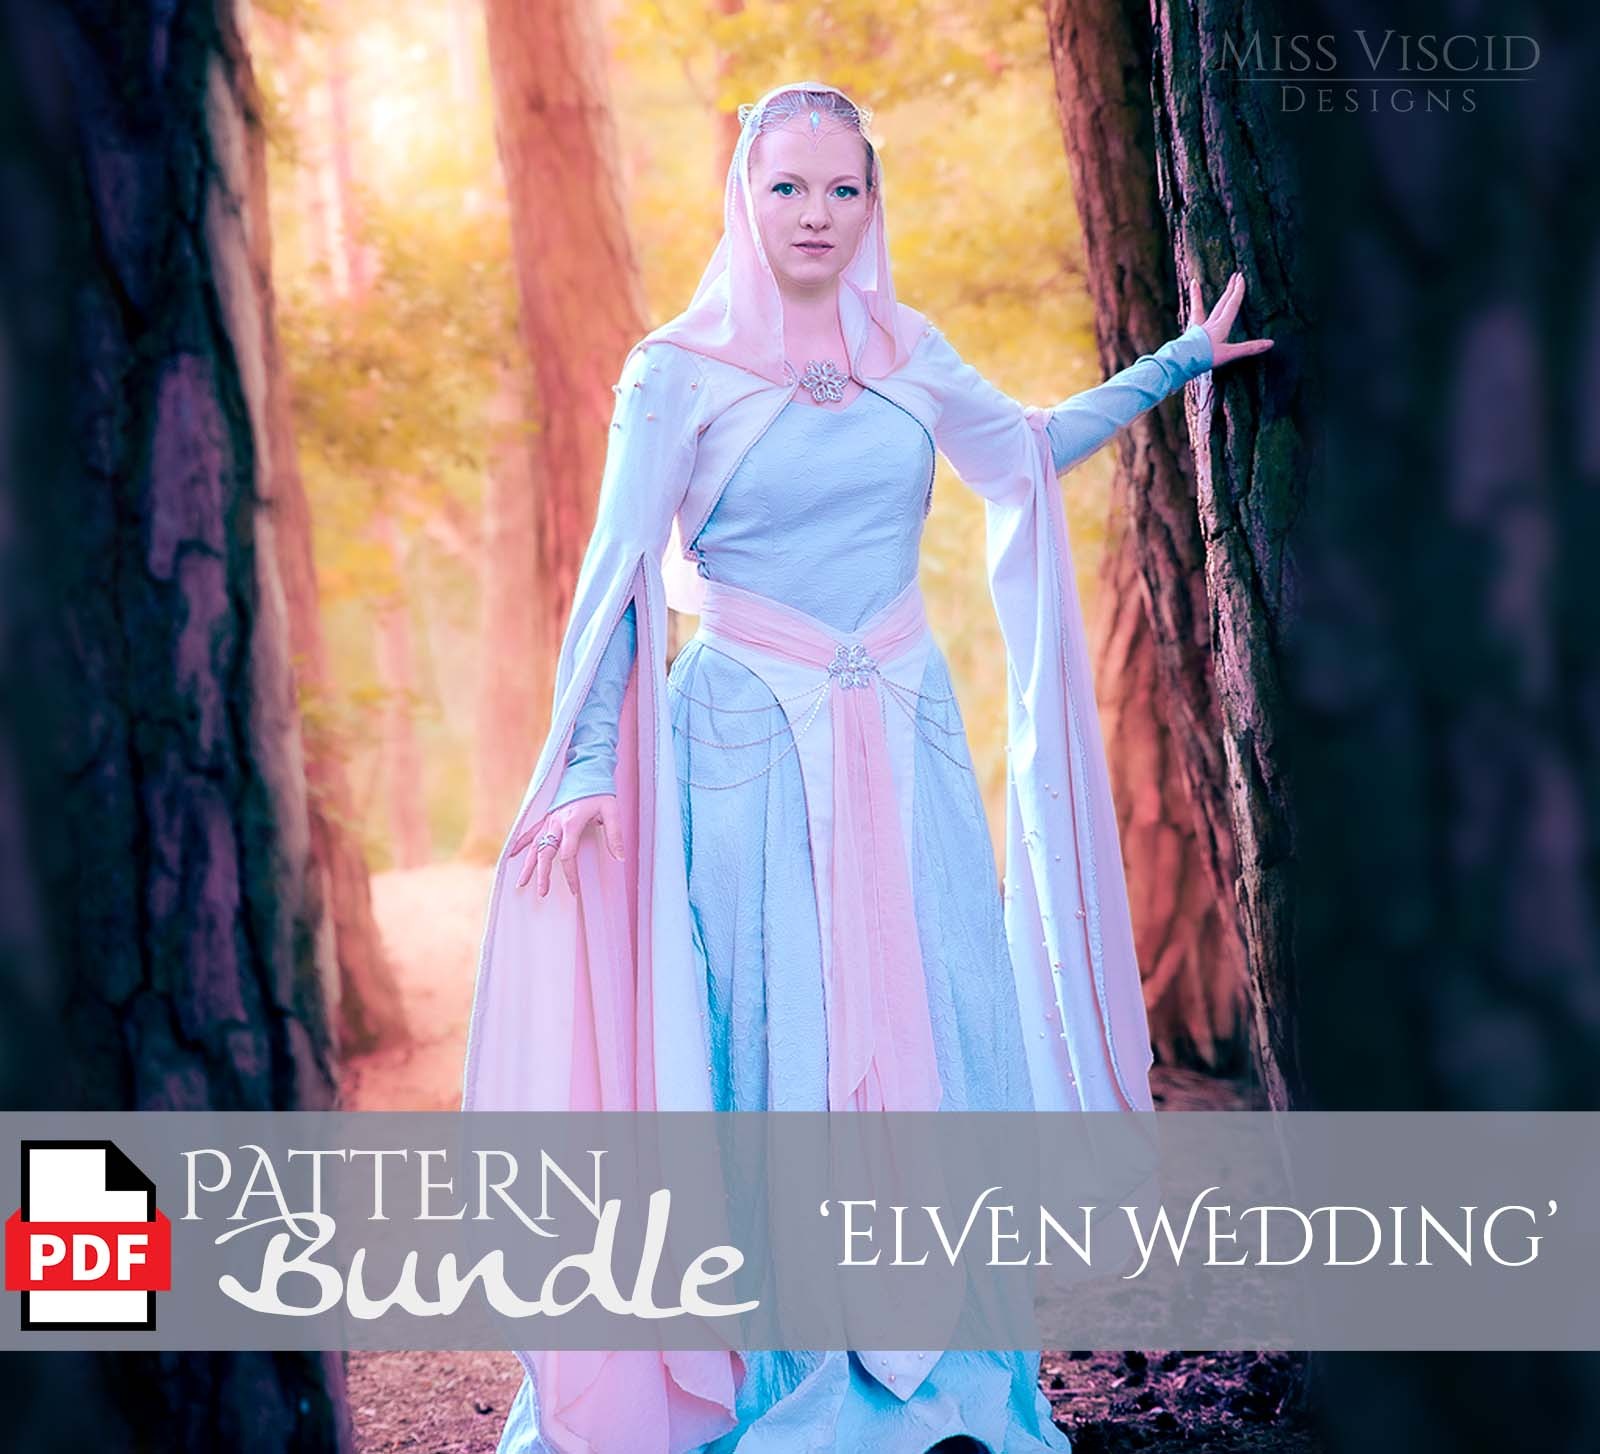 ELVEN WEDDING - PDF pattern bundle for fantasy bridal gown